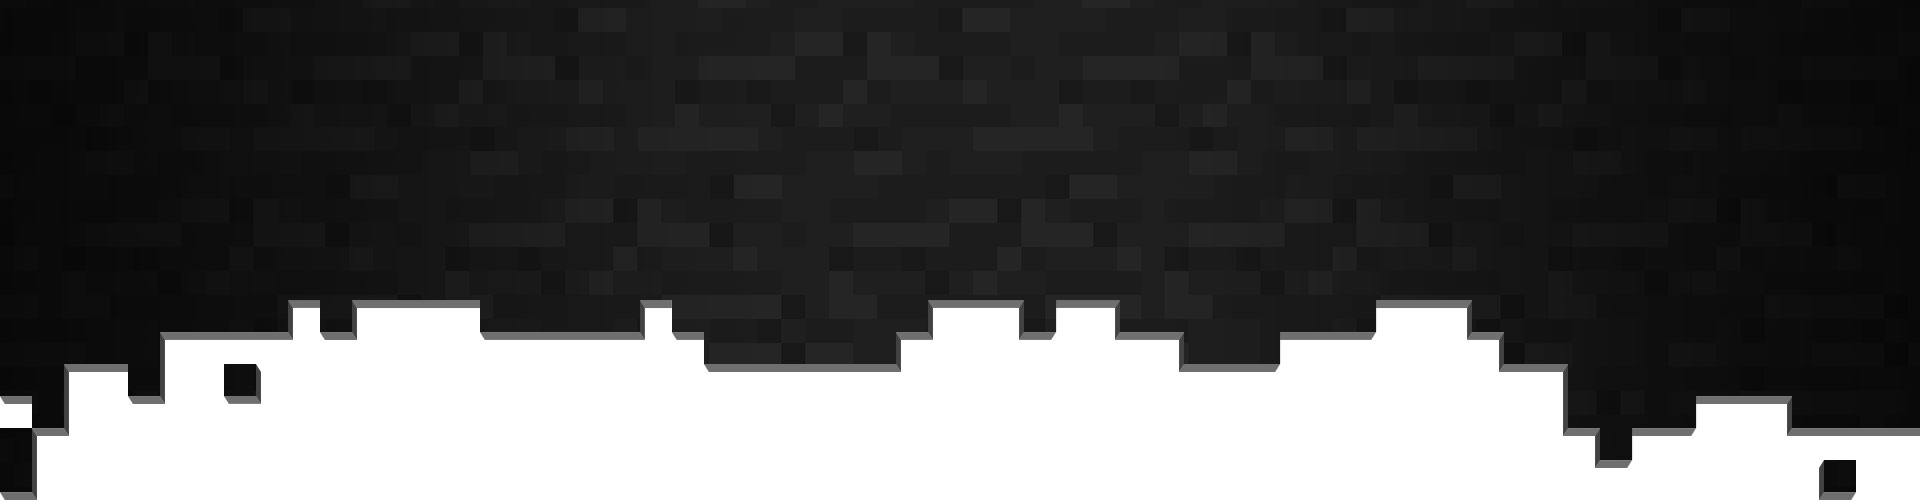 Čierne a sivé pixely